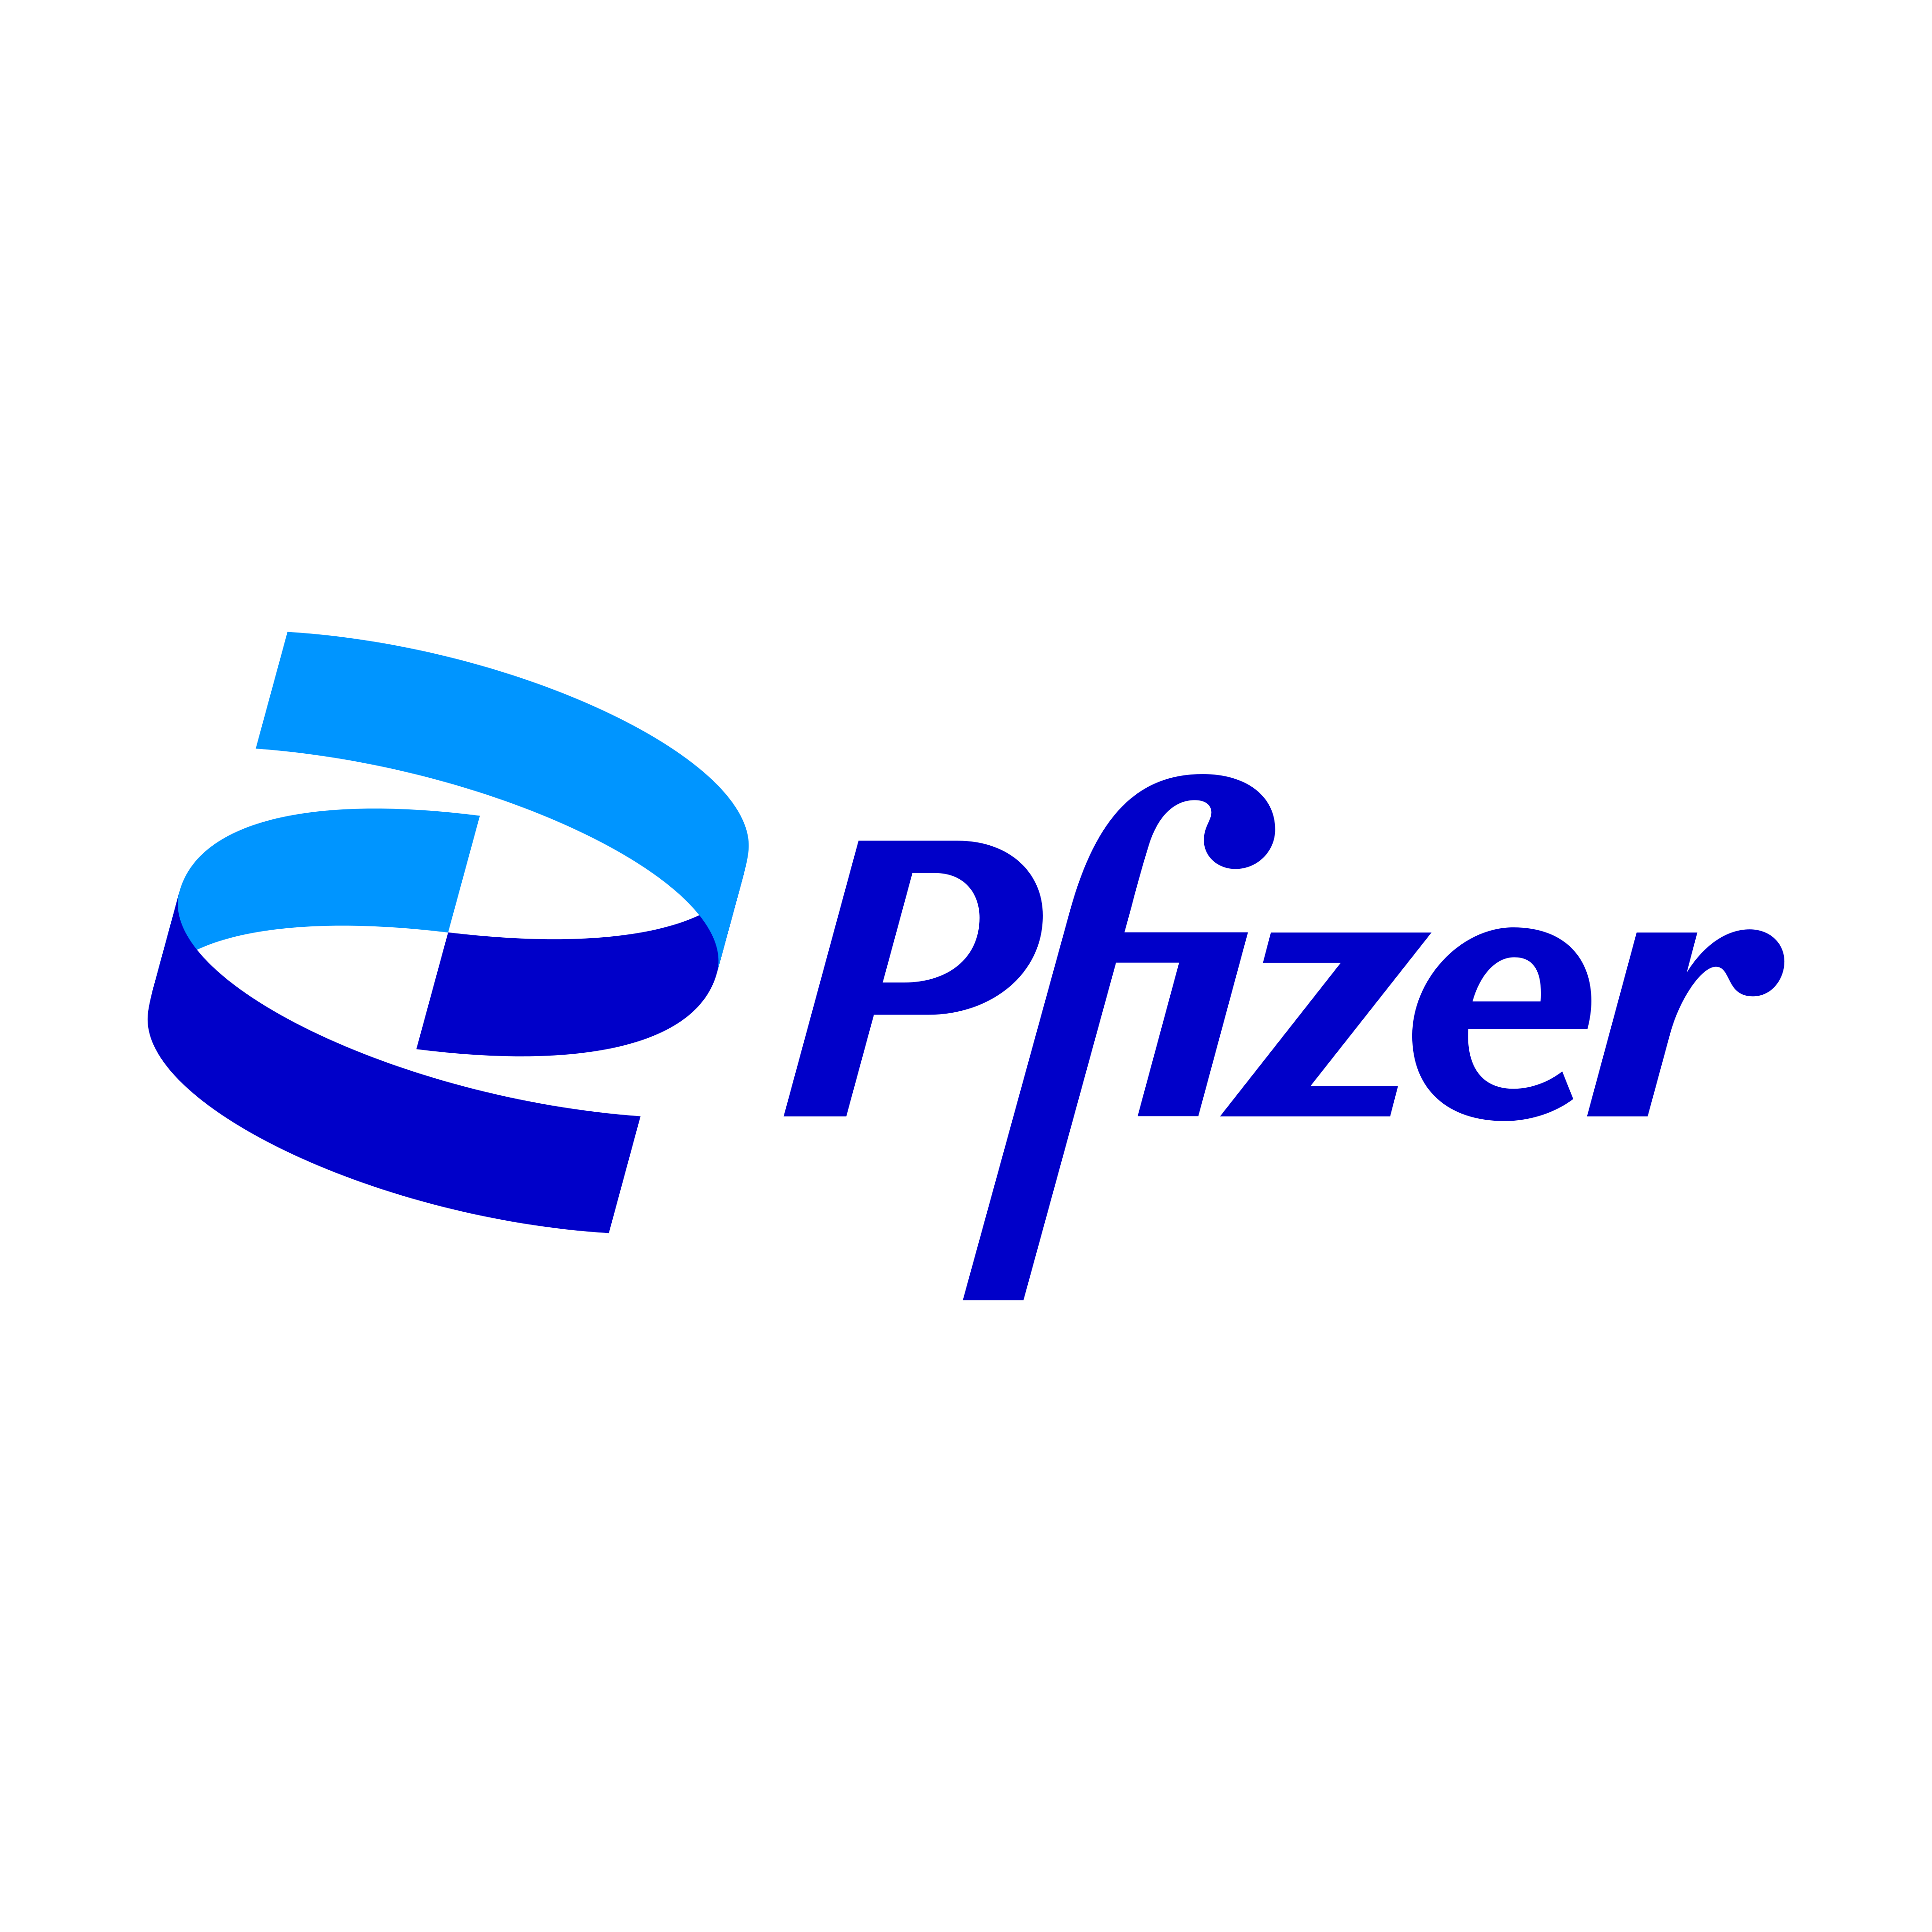 pfizer logo 0 1 - Pfizer Logo